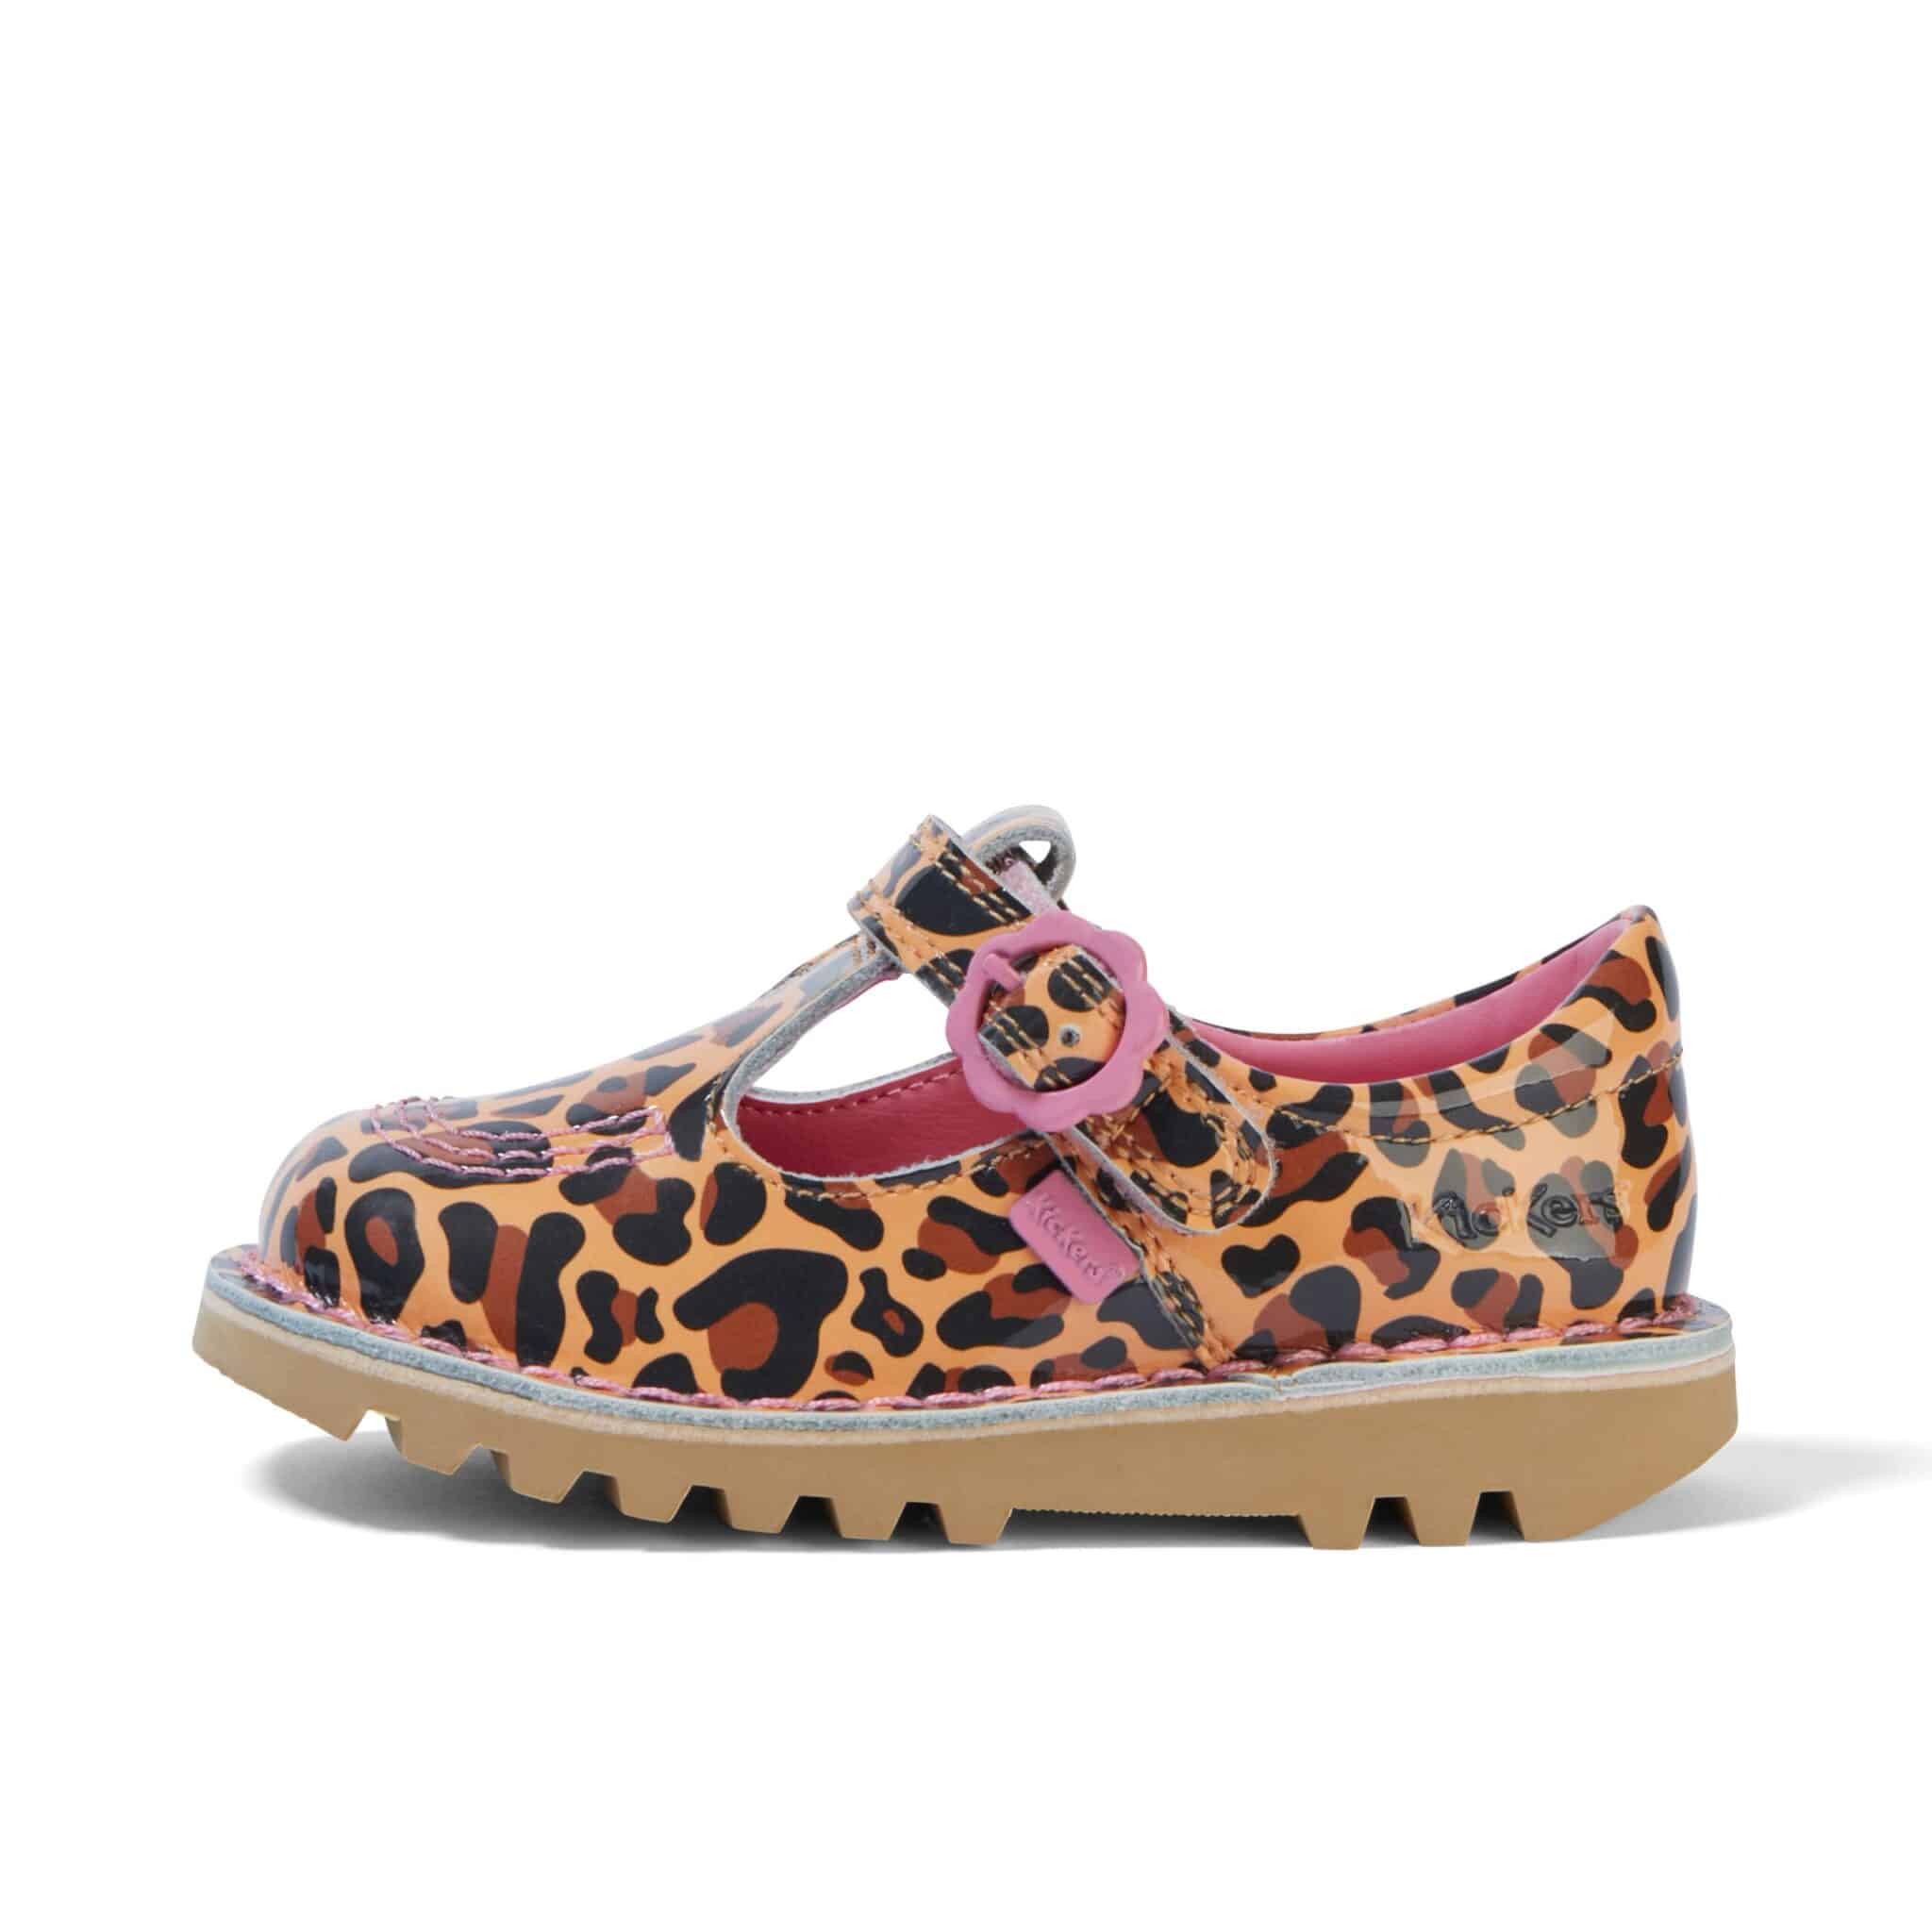 kickers kick t leopard patent girls shoes side angle